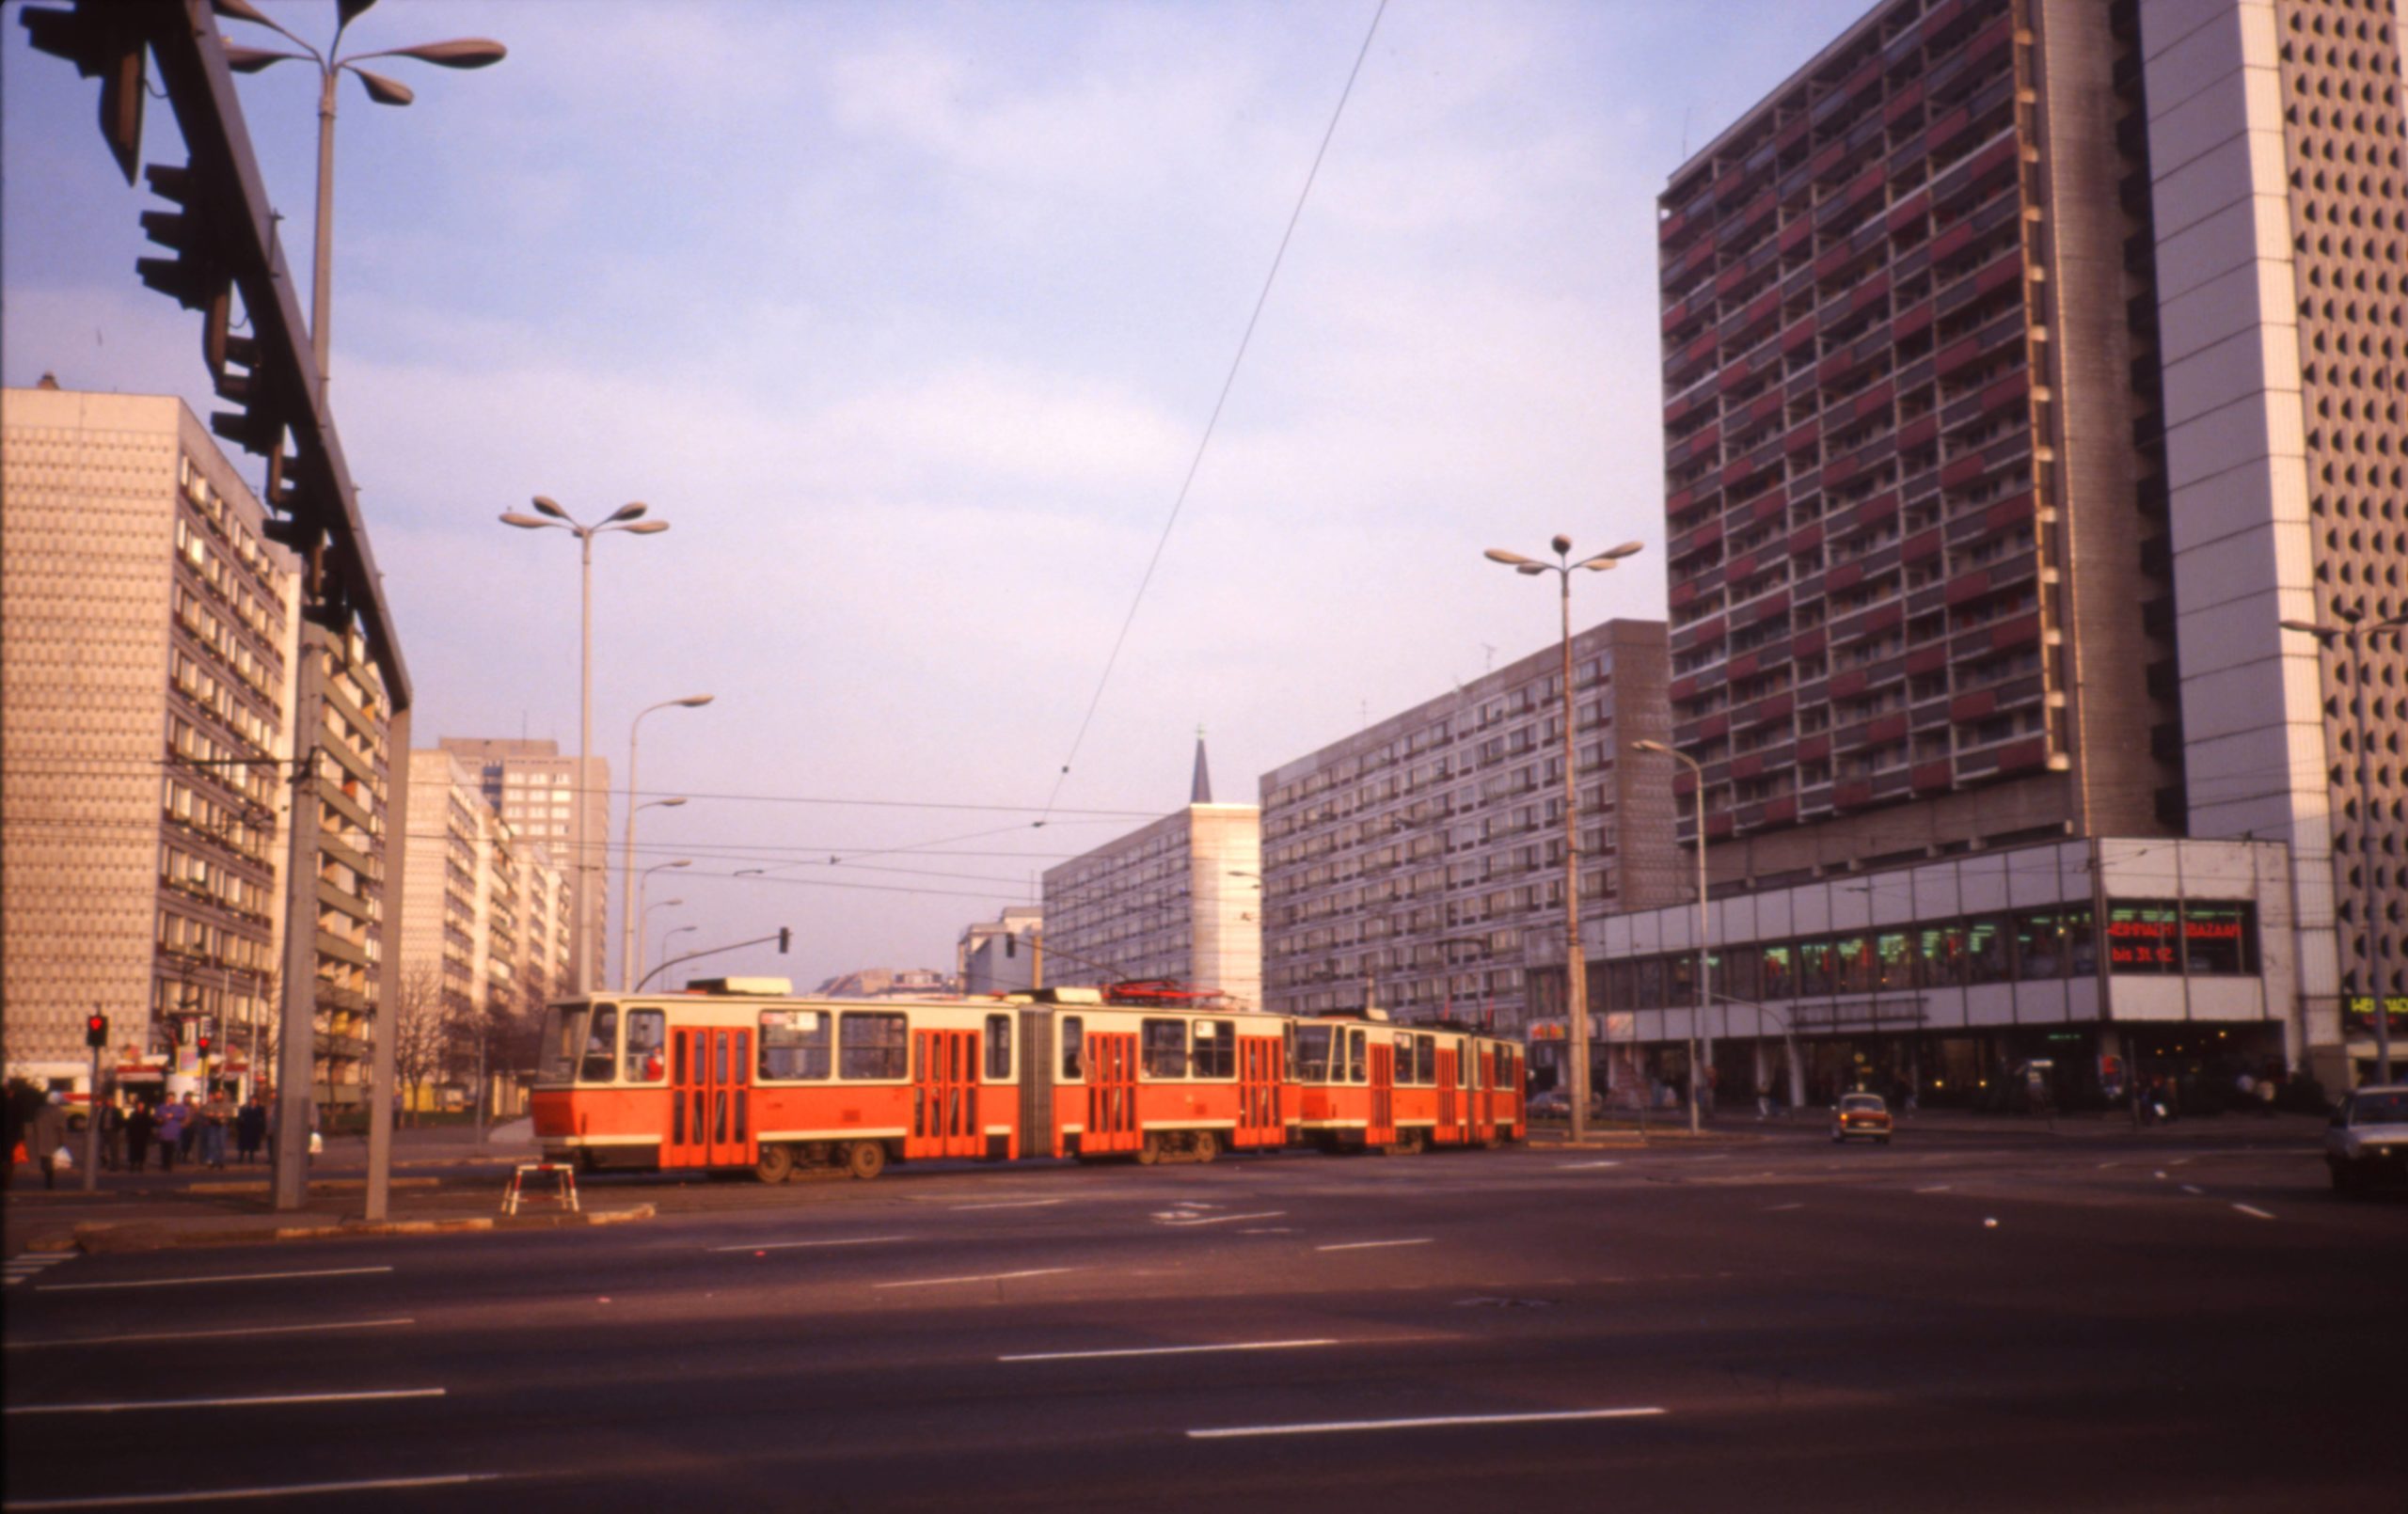 Straßenbahn in Berlin: 1990 fährt noch die rote Tram durch Ost-Berlin. Foto: Imago/Gerhard Leber